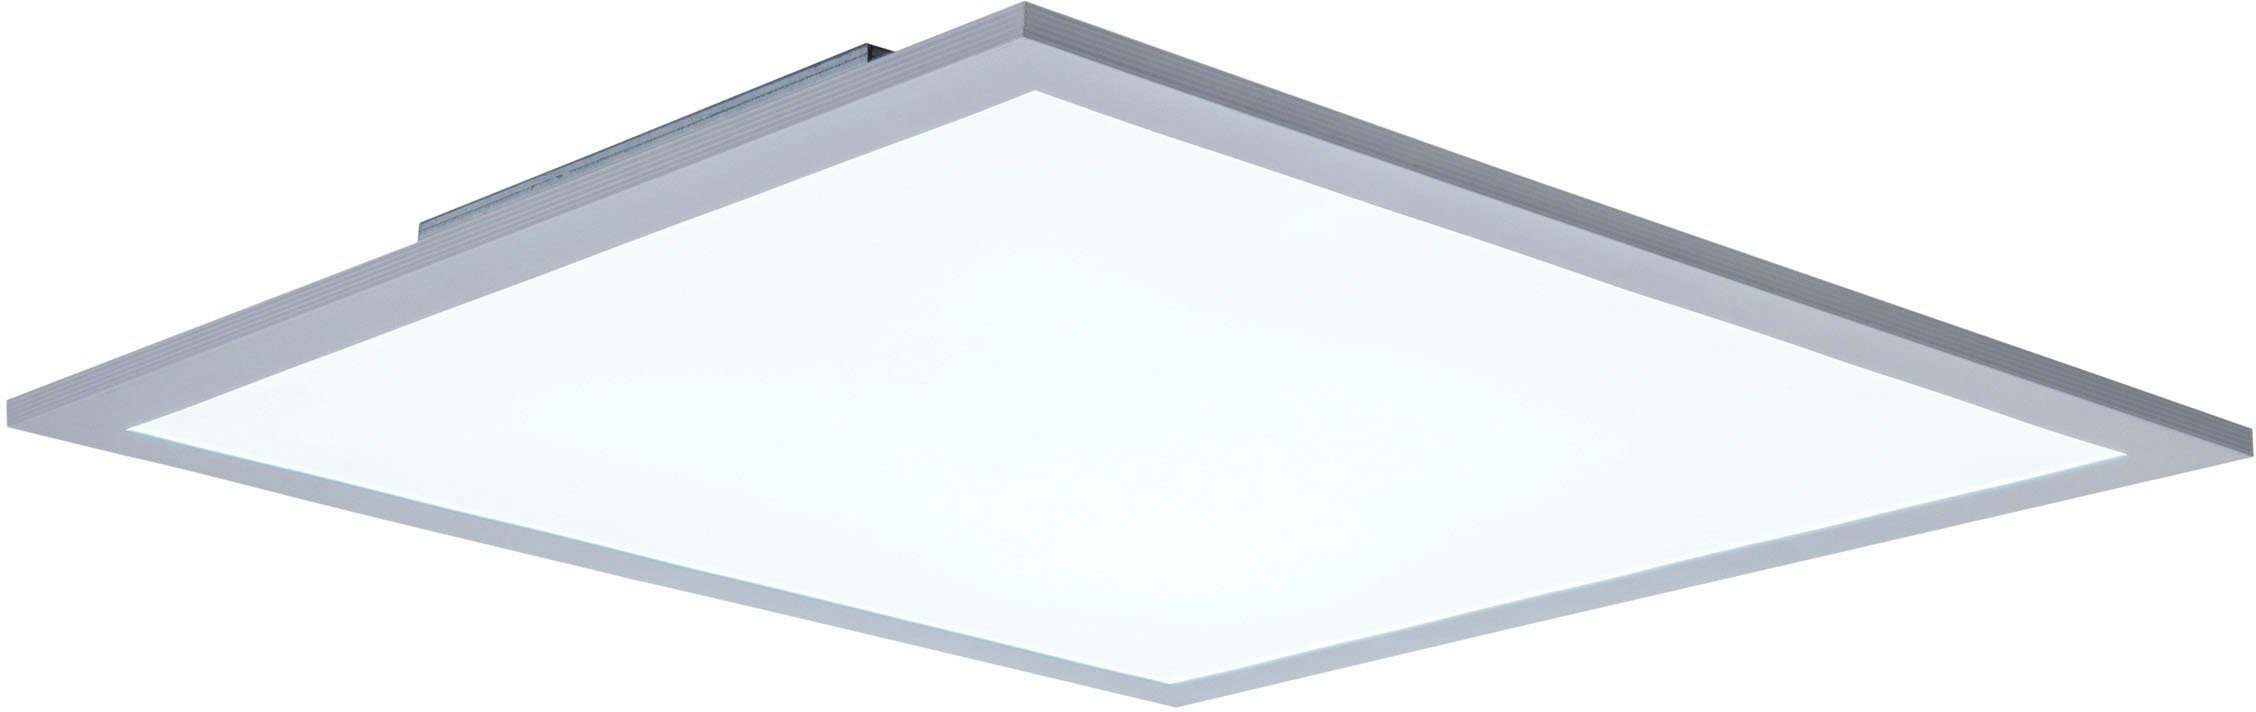 Aufbaupanel Neutralweiß, näve LED, 120 LED Panel LED Nicola, fest integriert, Lichtfarbe weiß neutralweiß 6cm, H: 45x45cm,